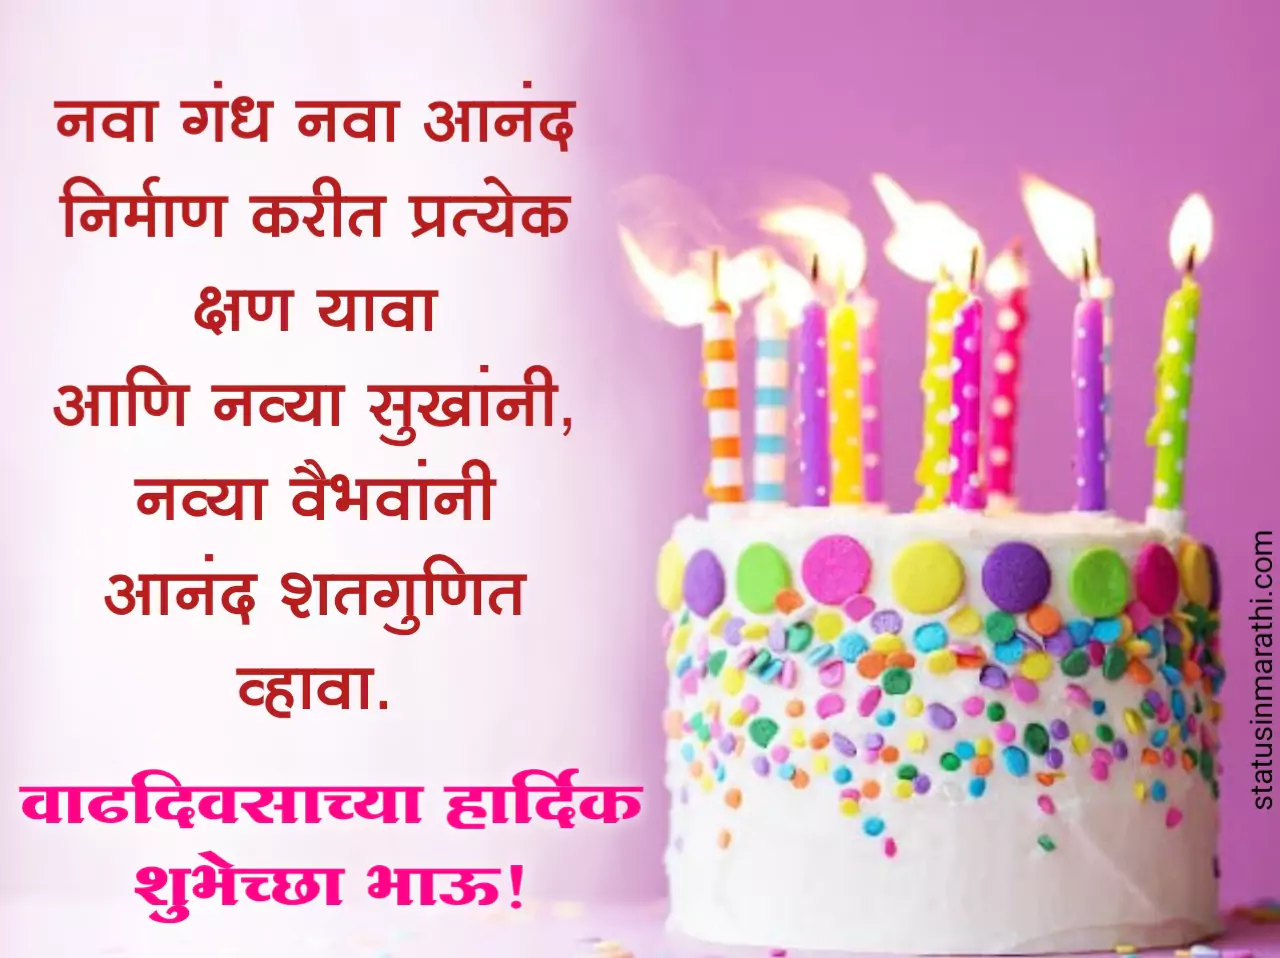 Happy Birthday status for brother in marathi